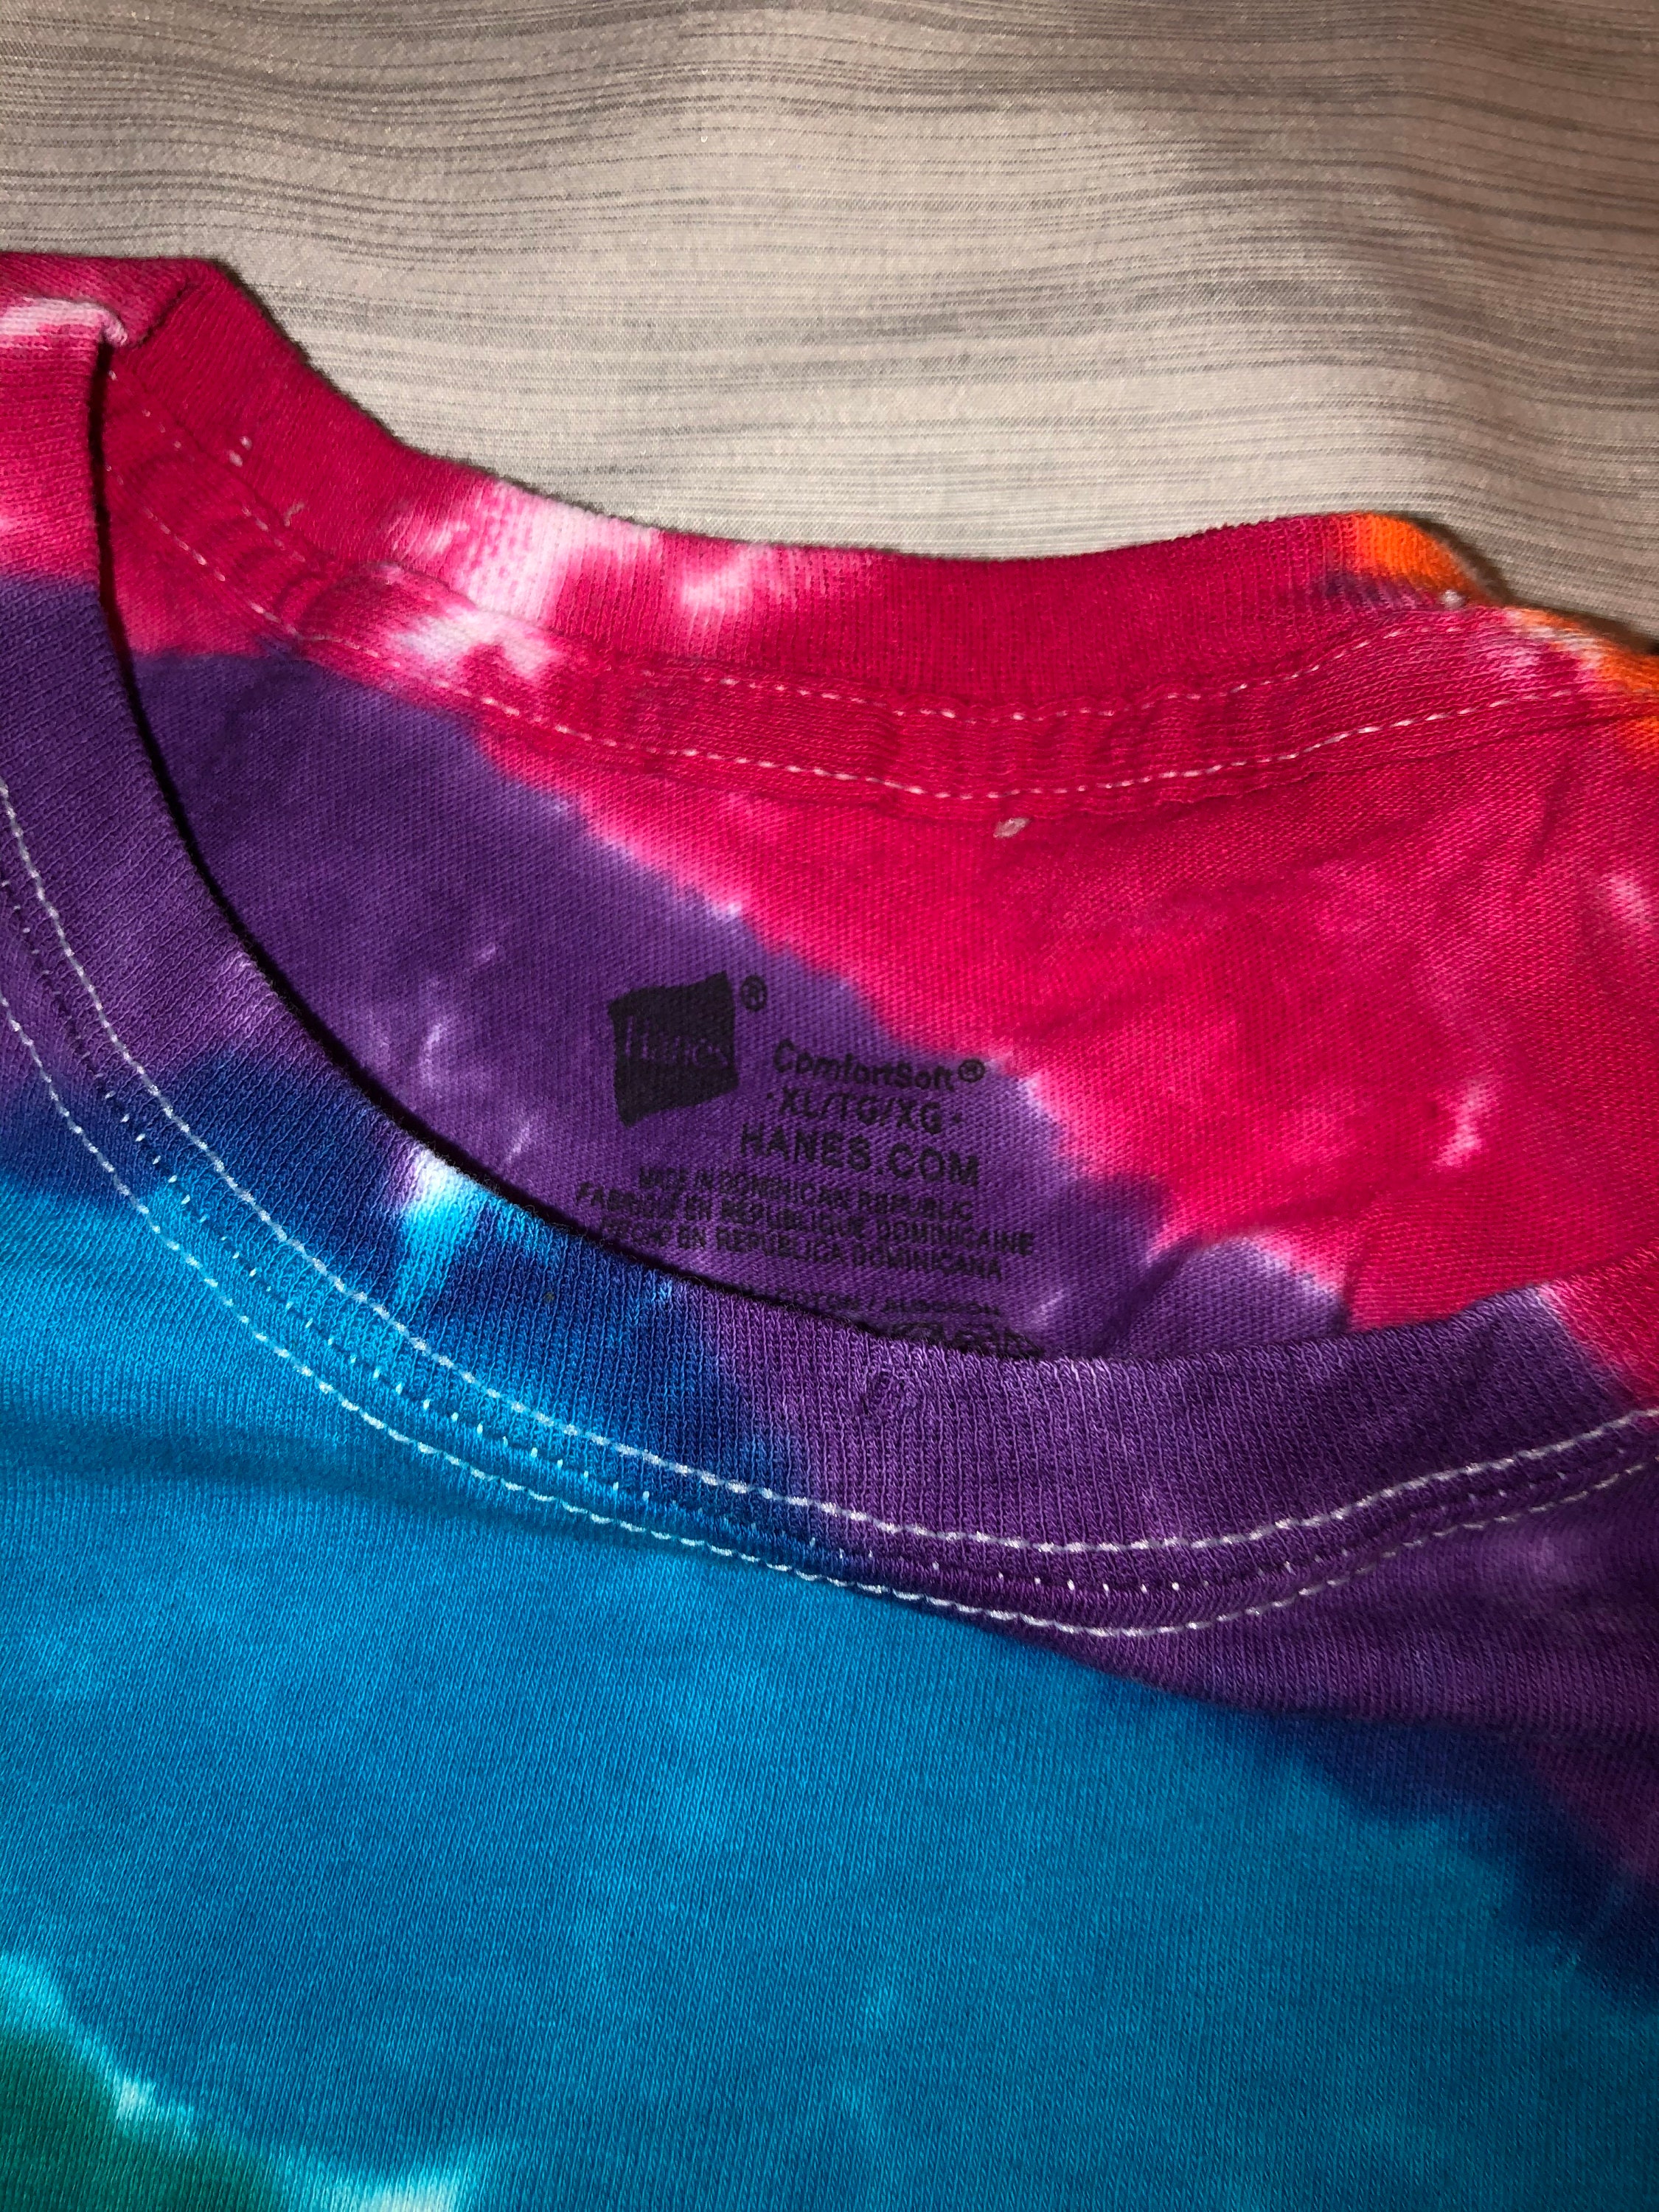 Adult XL rainbow tie-dye | Etsy